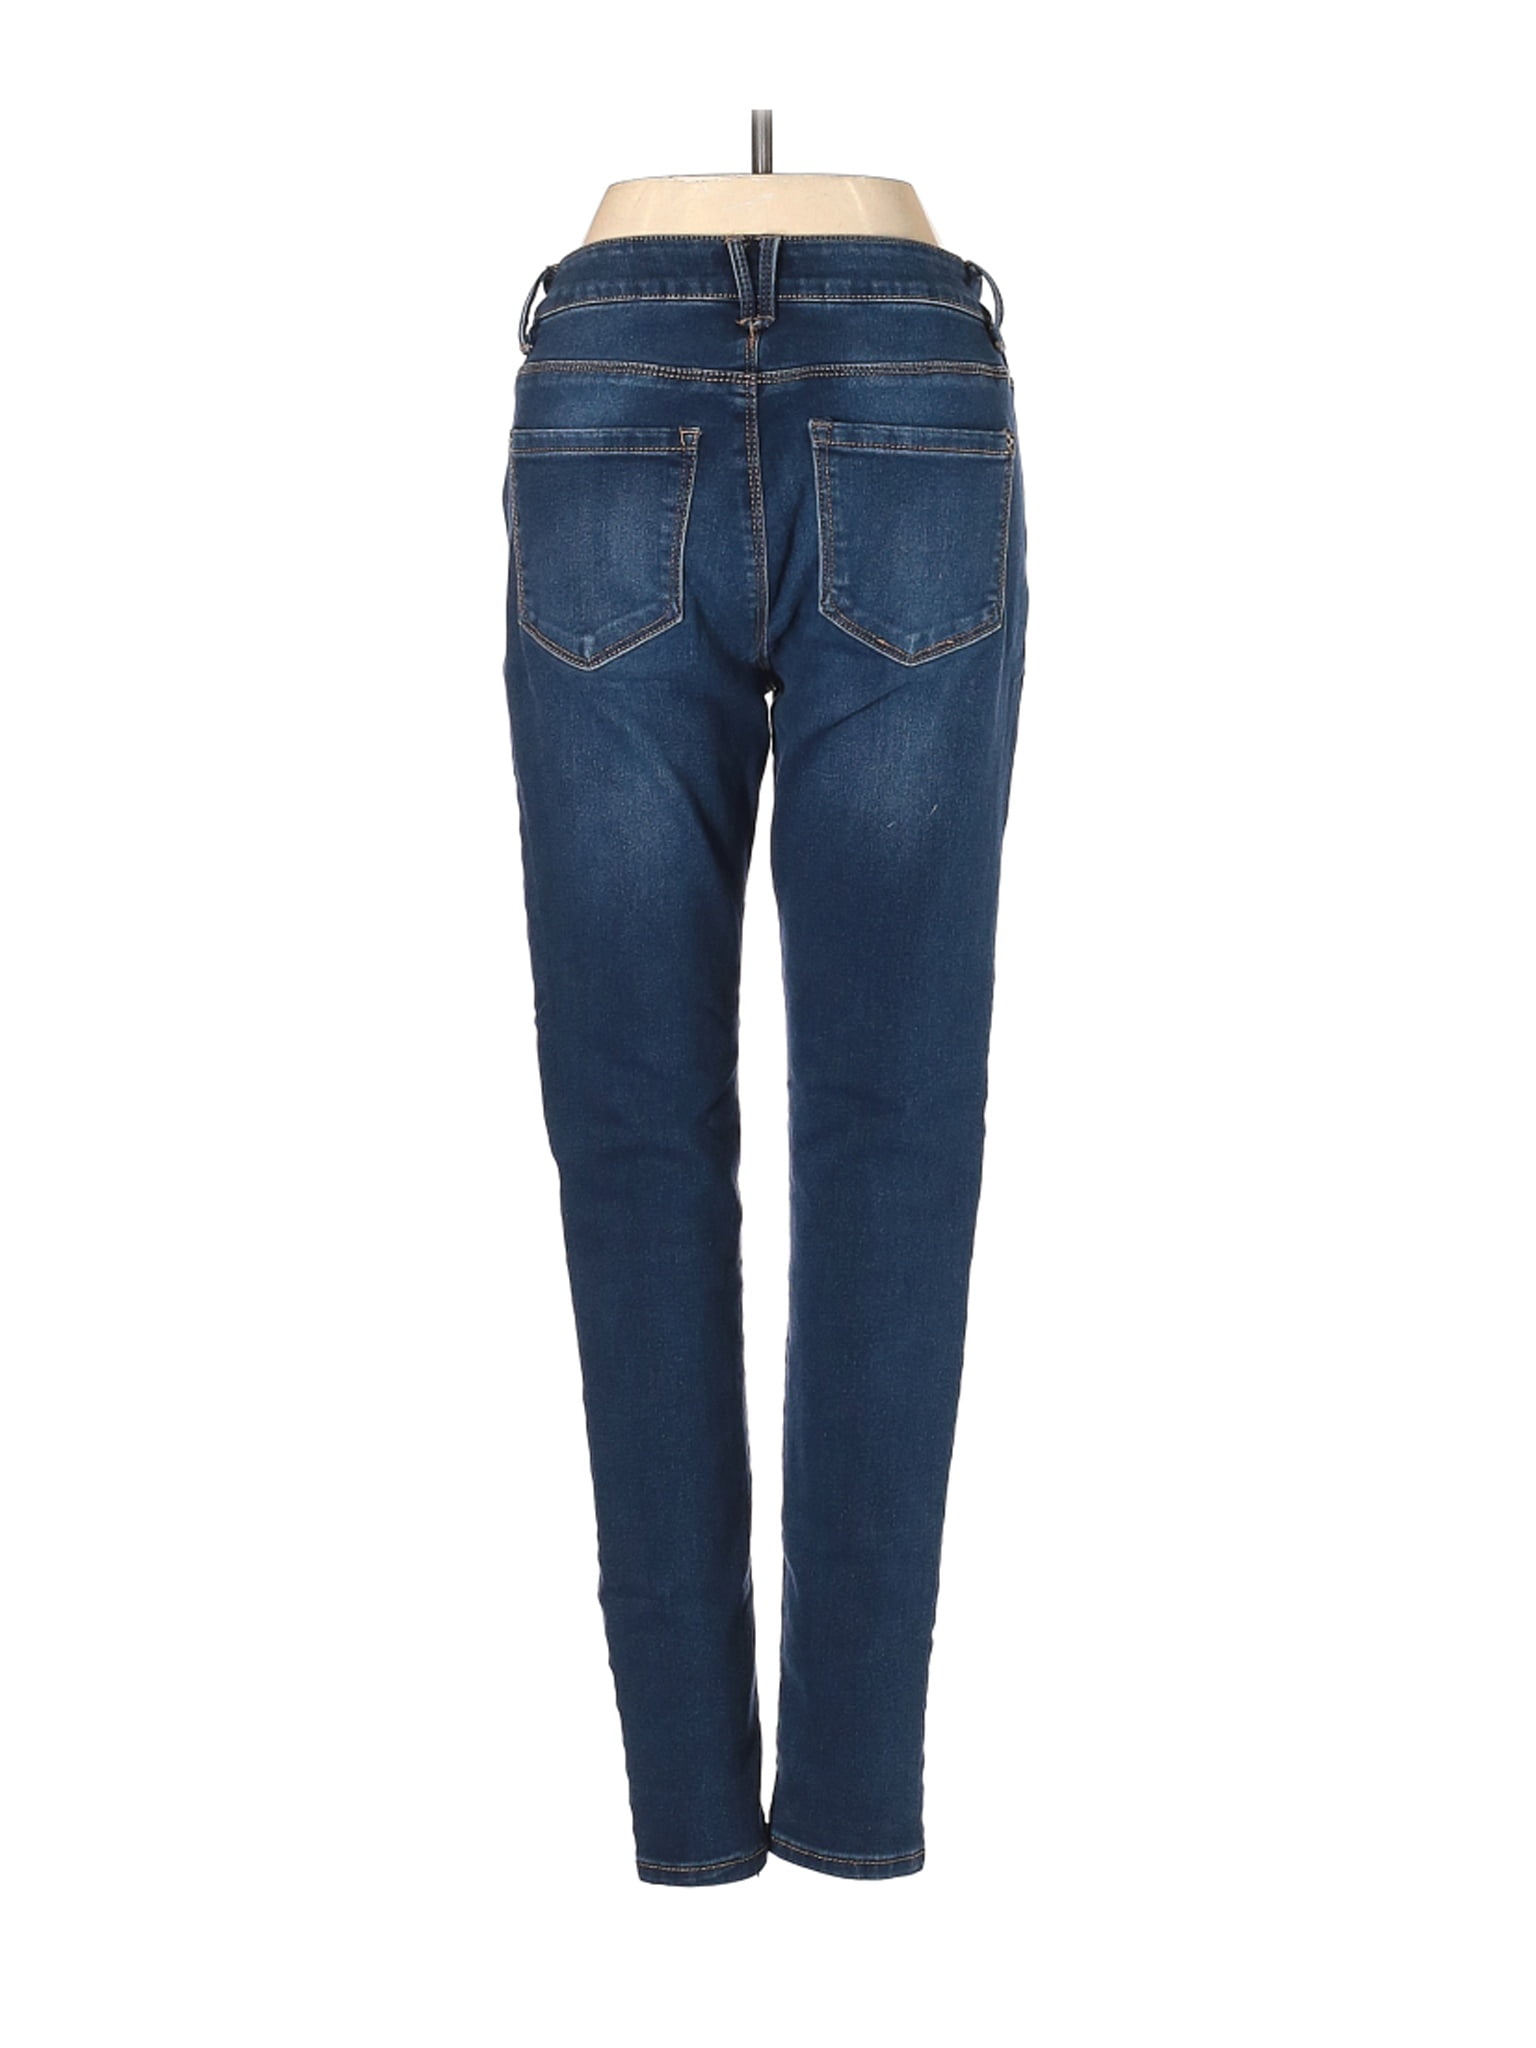 curve appeal women's jeans